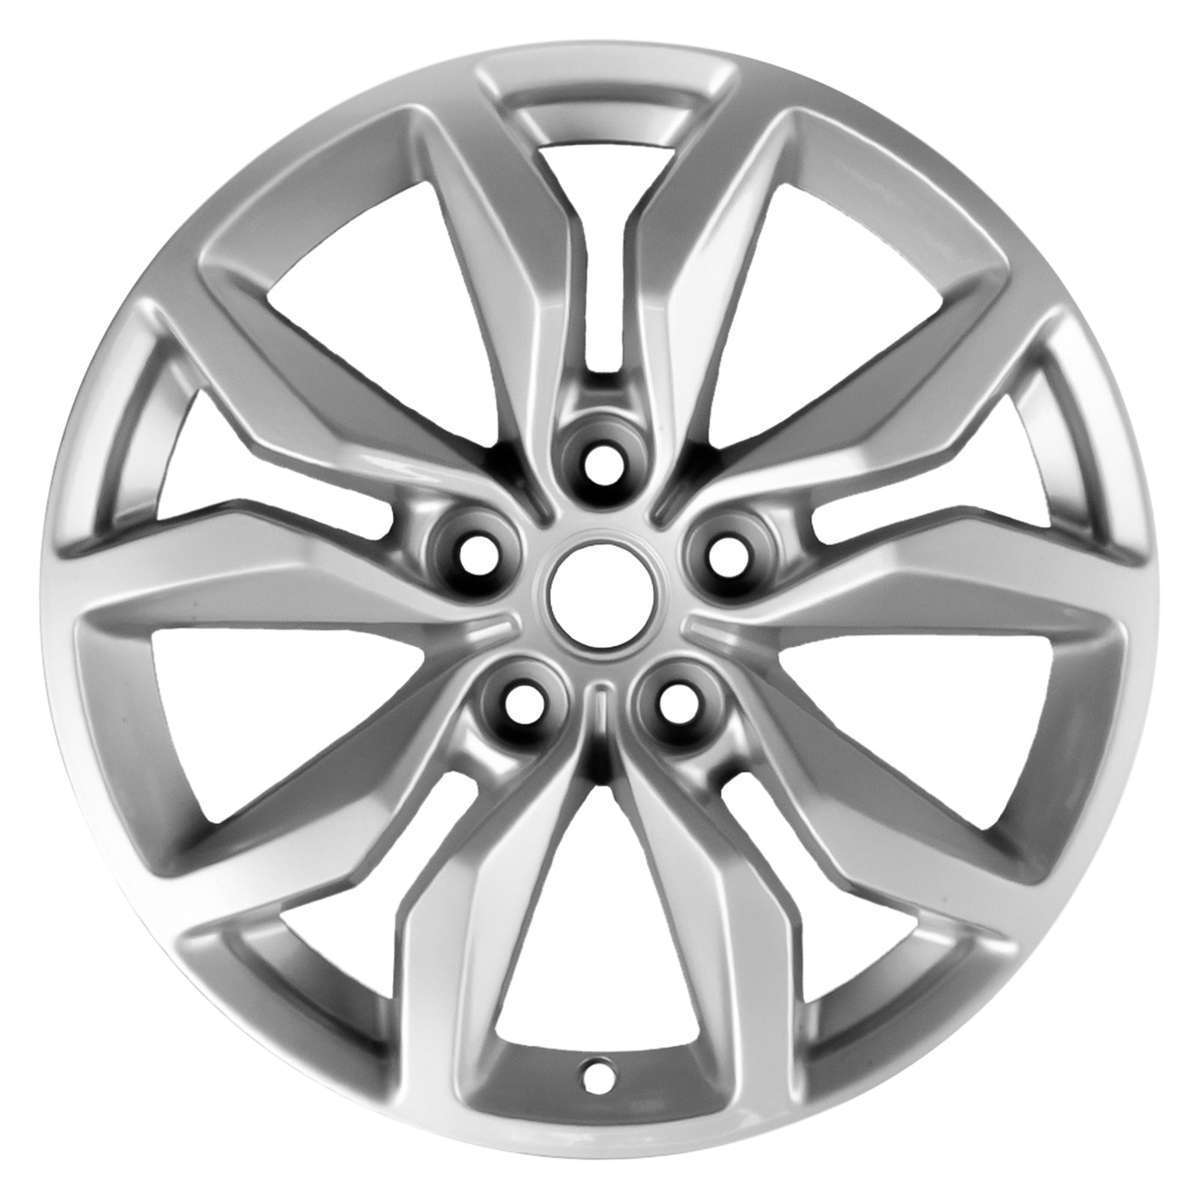 2018 Chevrolet Impala New 18" Replacement Wheel Rim RW5712S